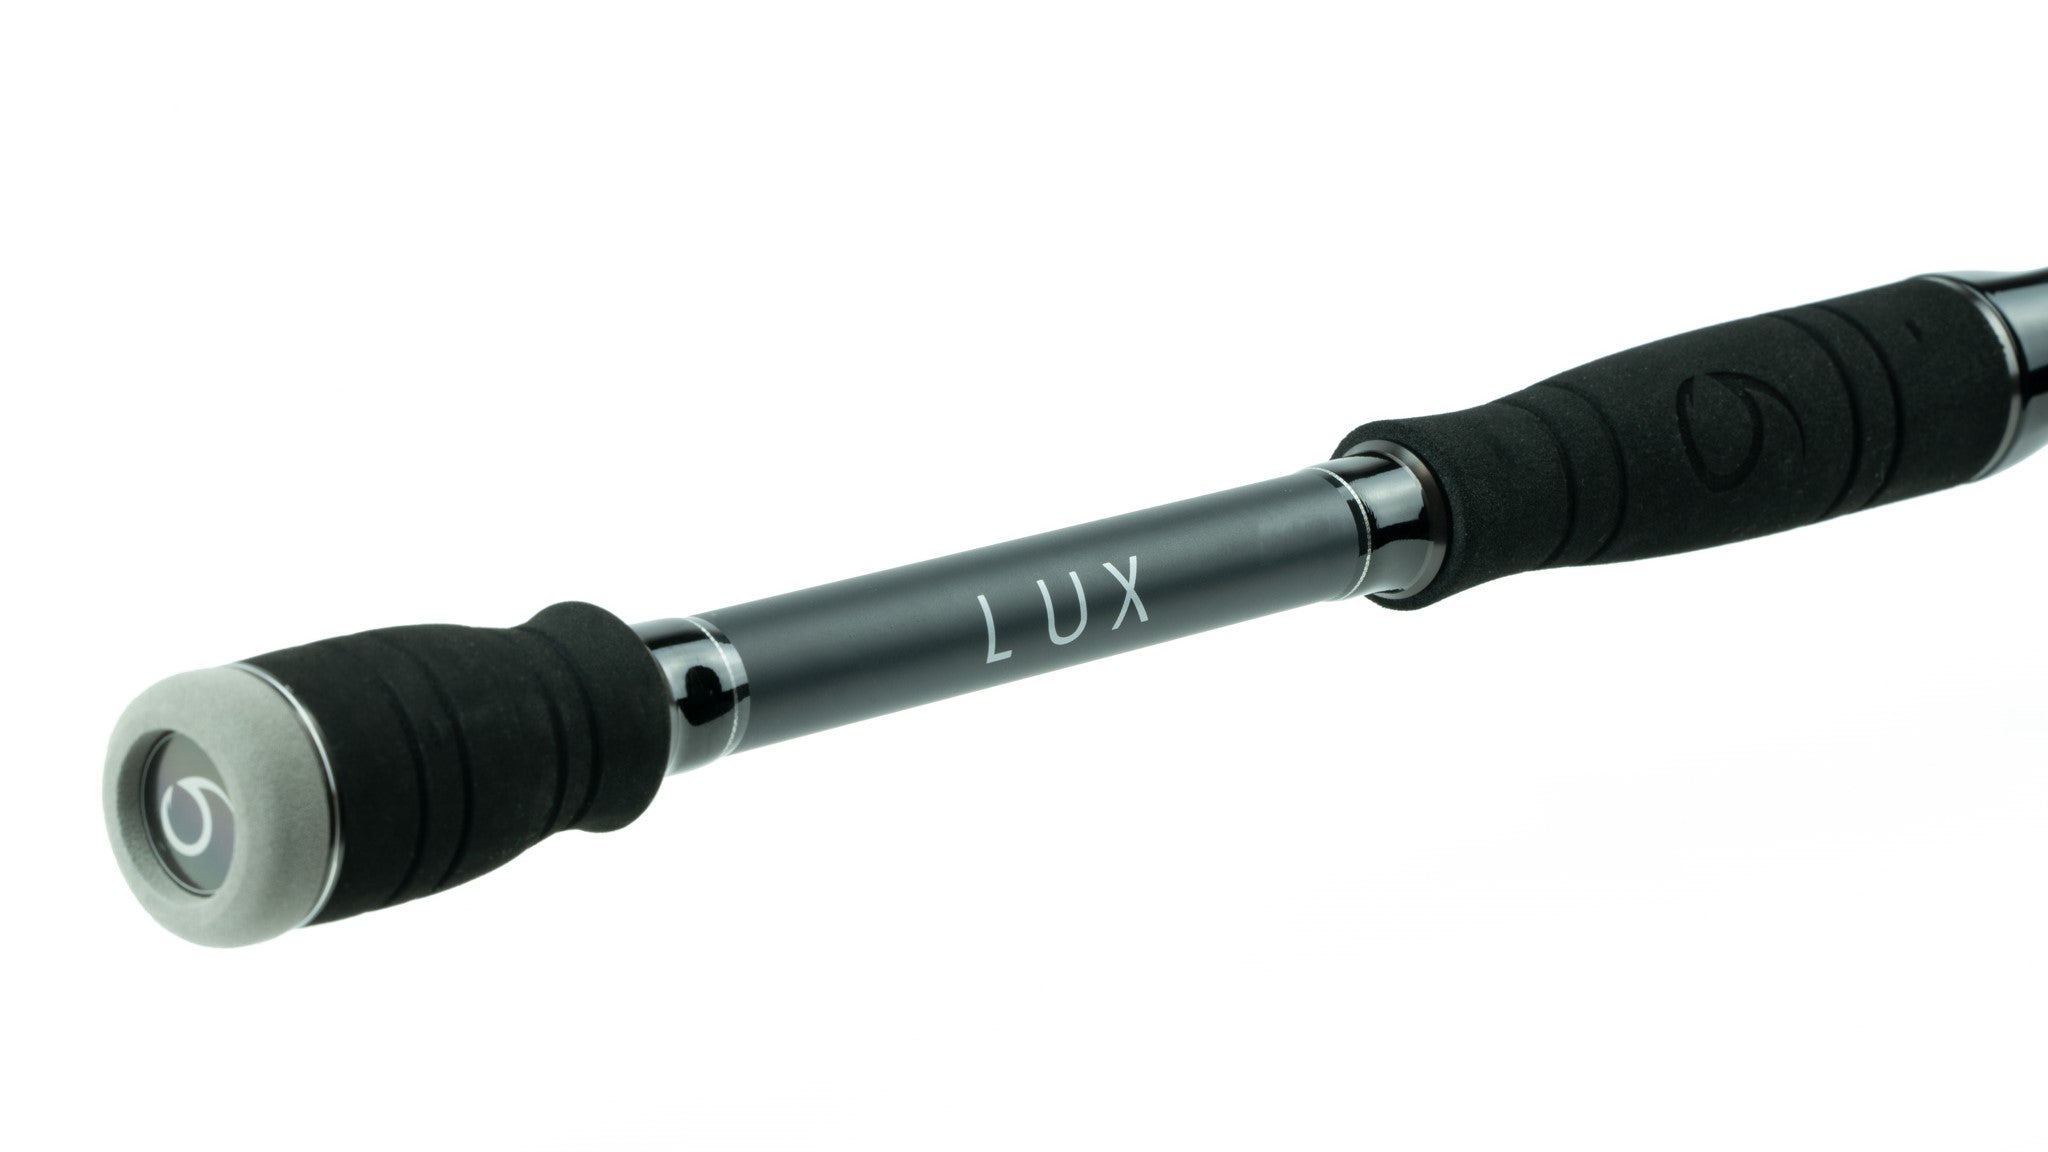 6th Sense Lux Casting Rod